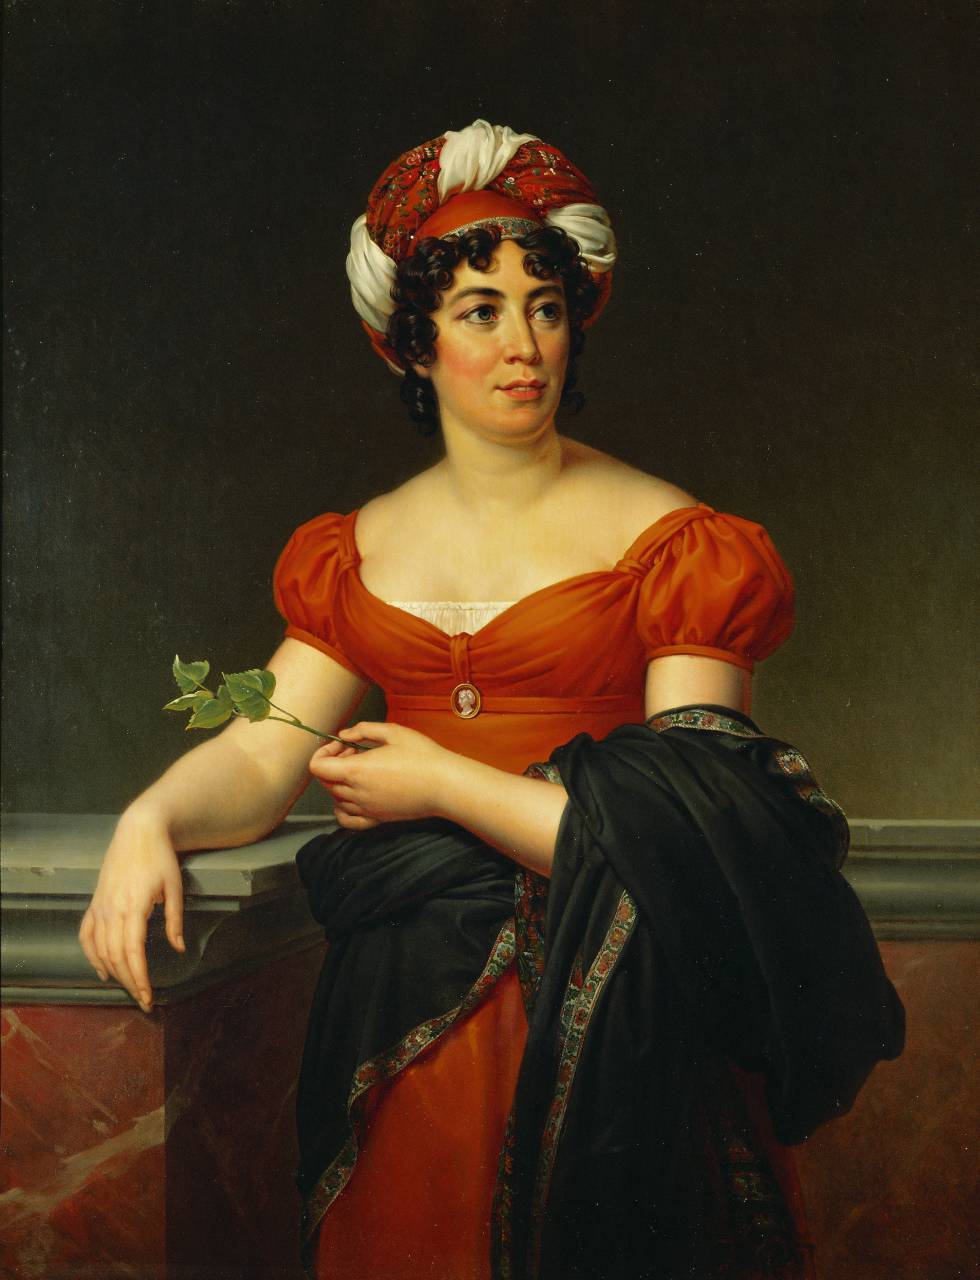 Retrato de Germaine Necker, Mme. de Stael, 1766-1817 